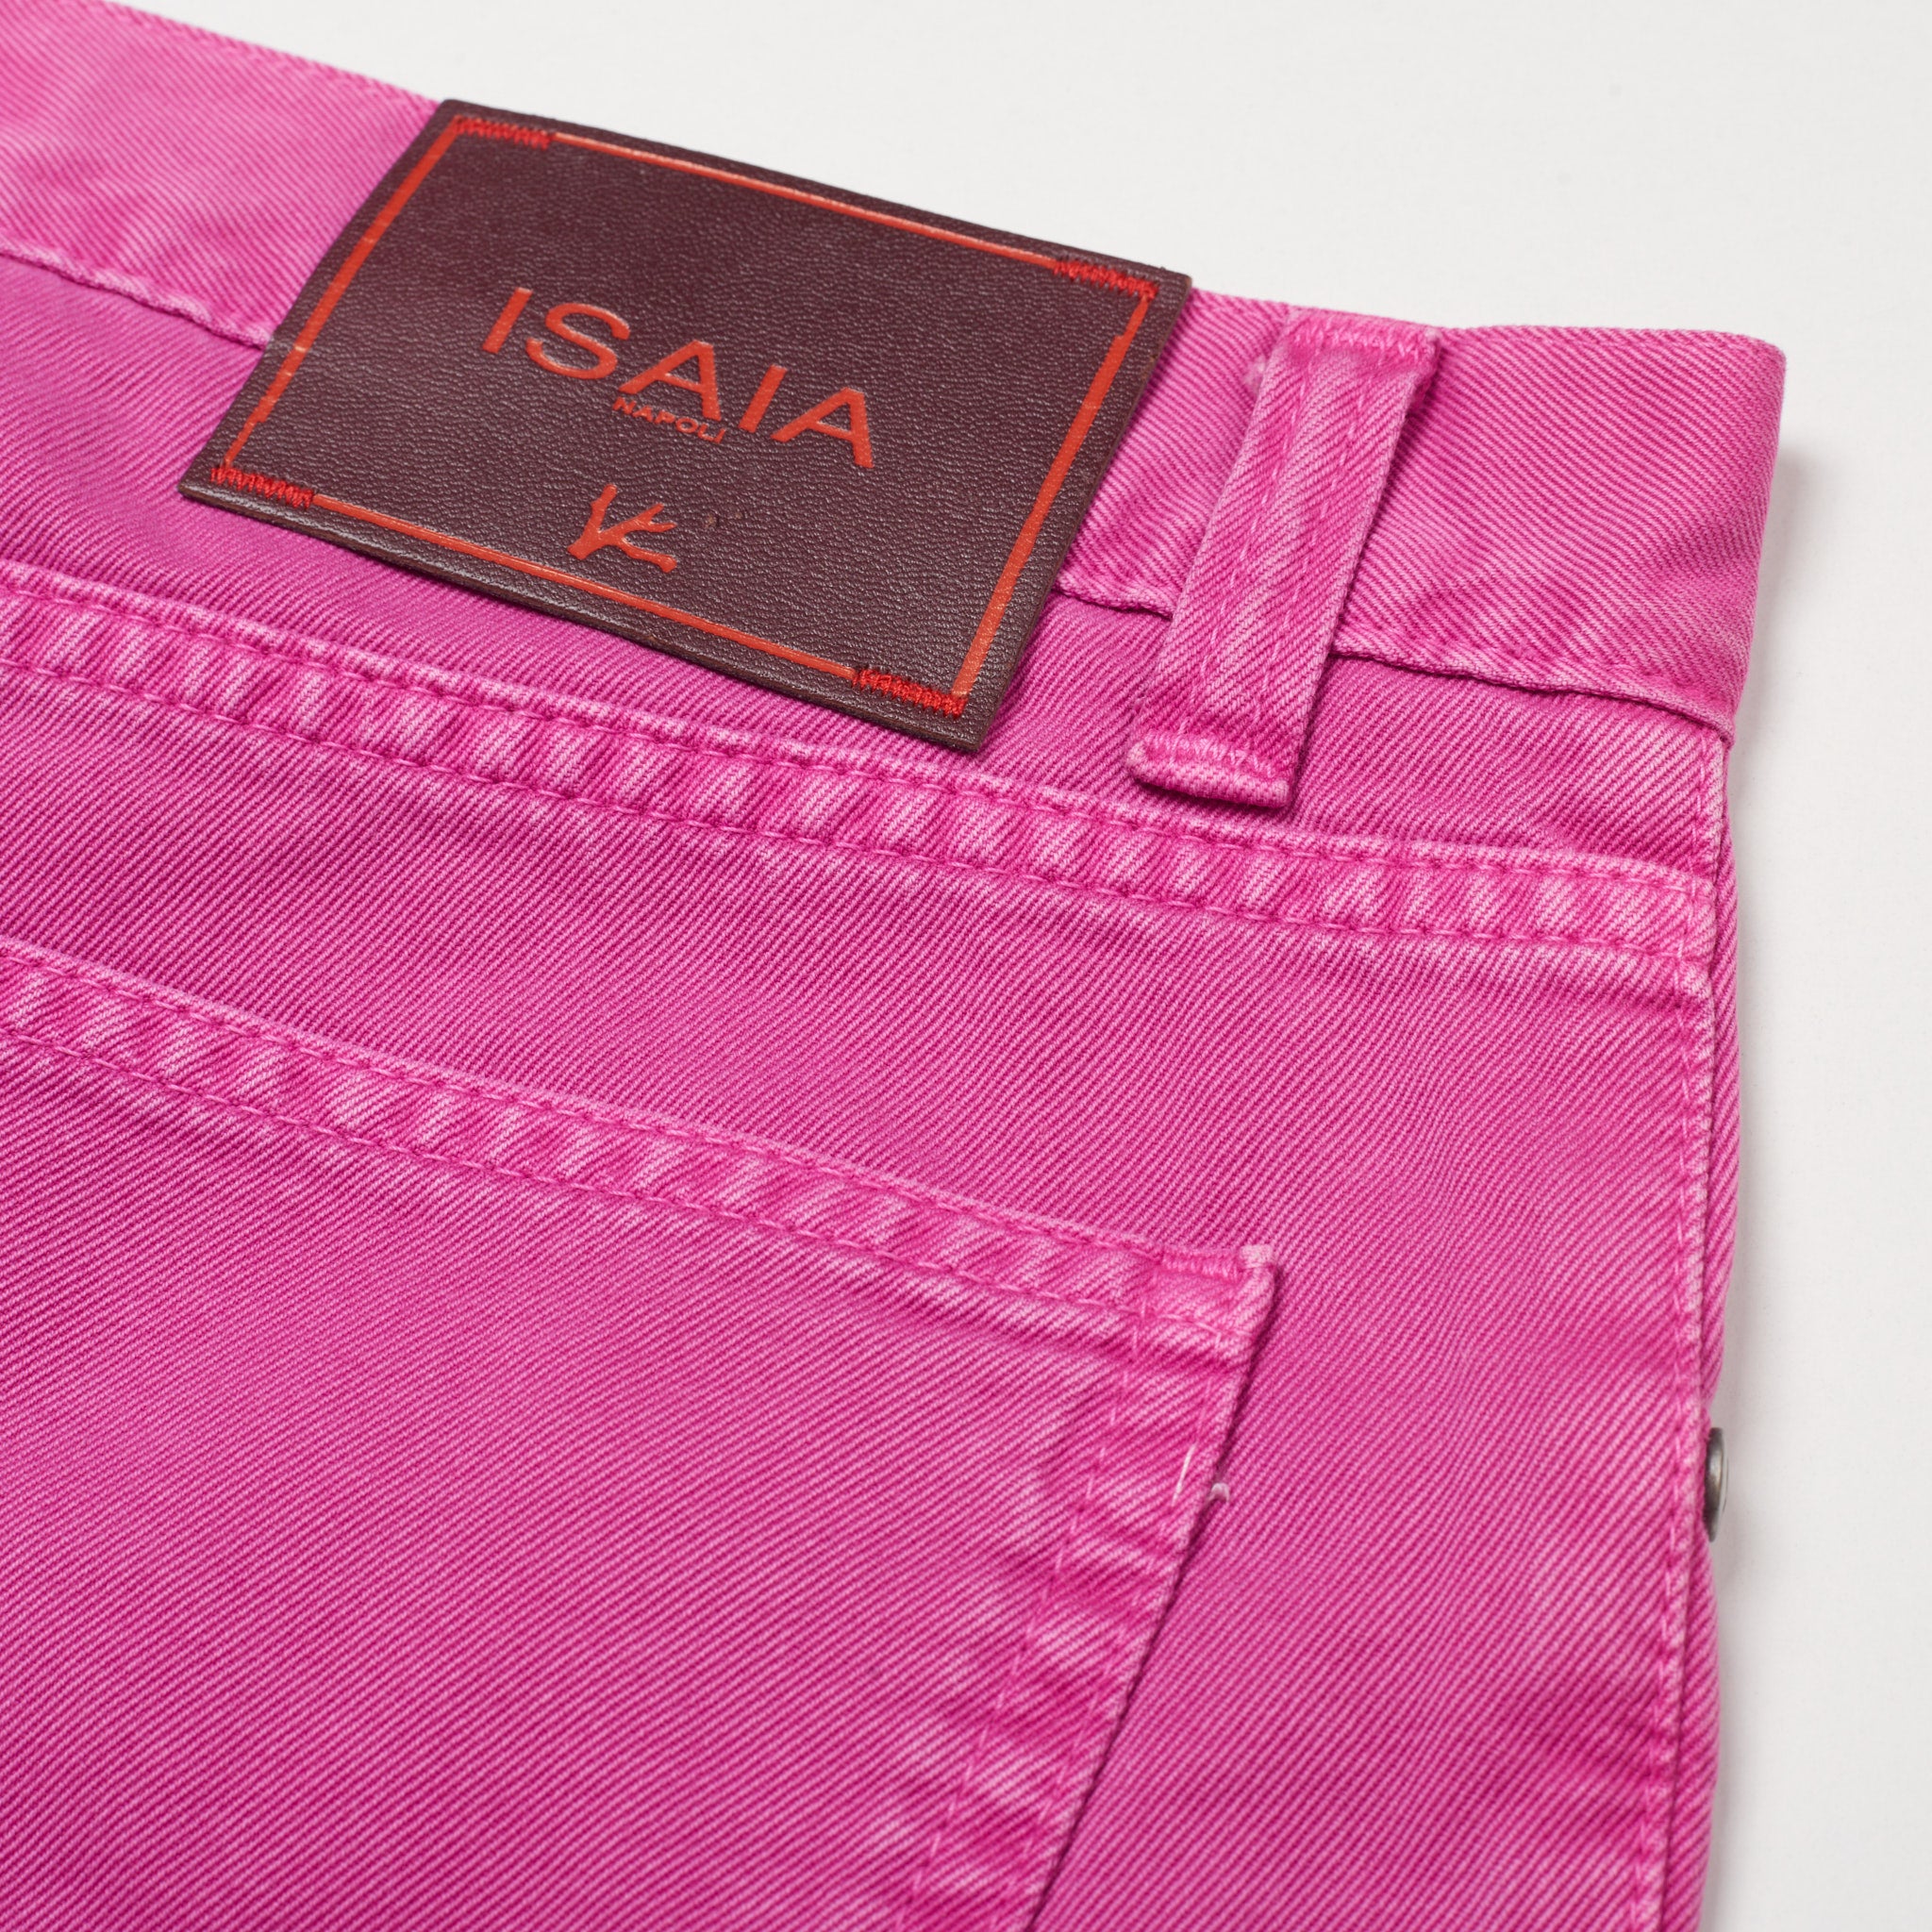 ISAIA Napoli Pink Denim Jeans Pants NEW US 31 Slim Fit SARTORIALE